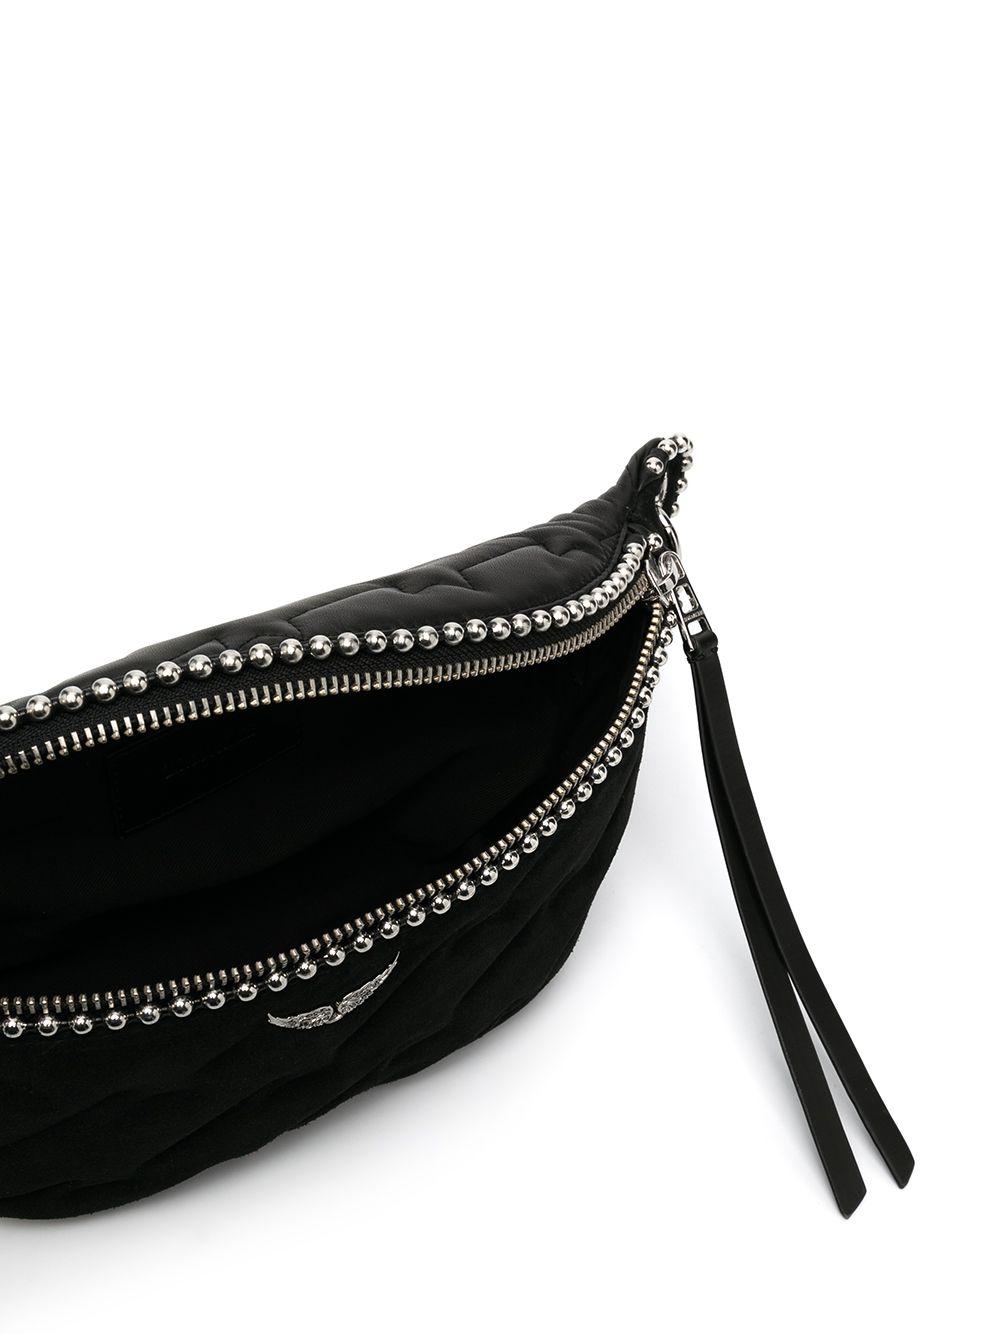 Zadig & Voltaire Edie Studded Belt Bag in Black | Lyst